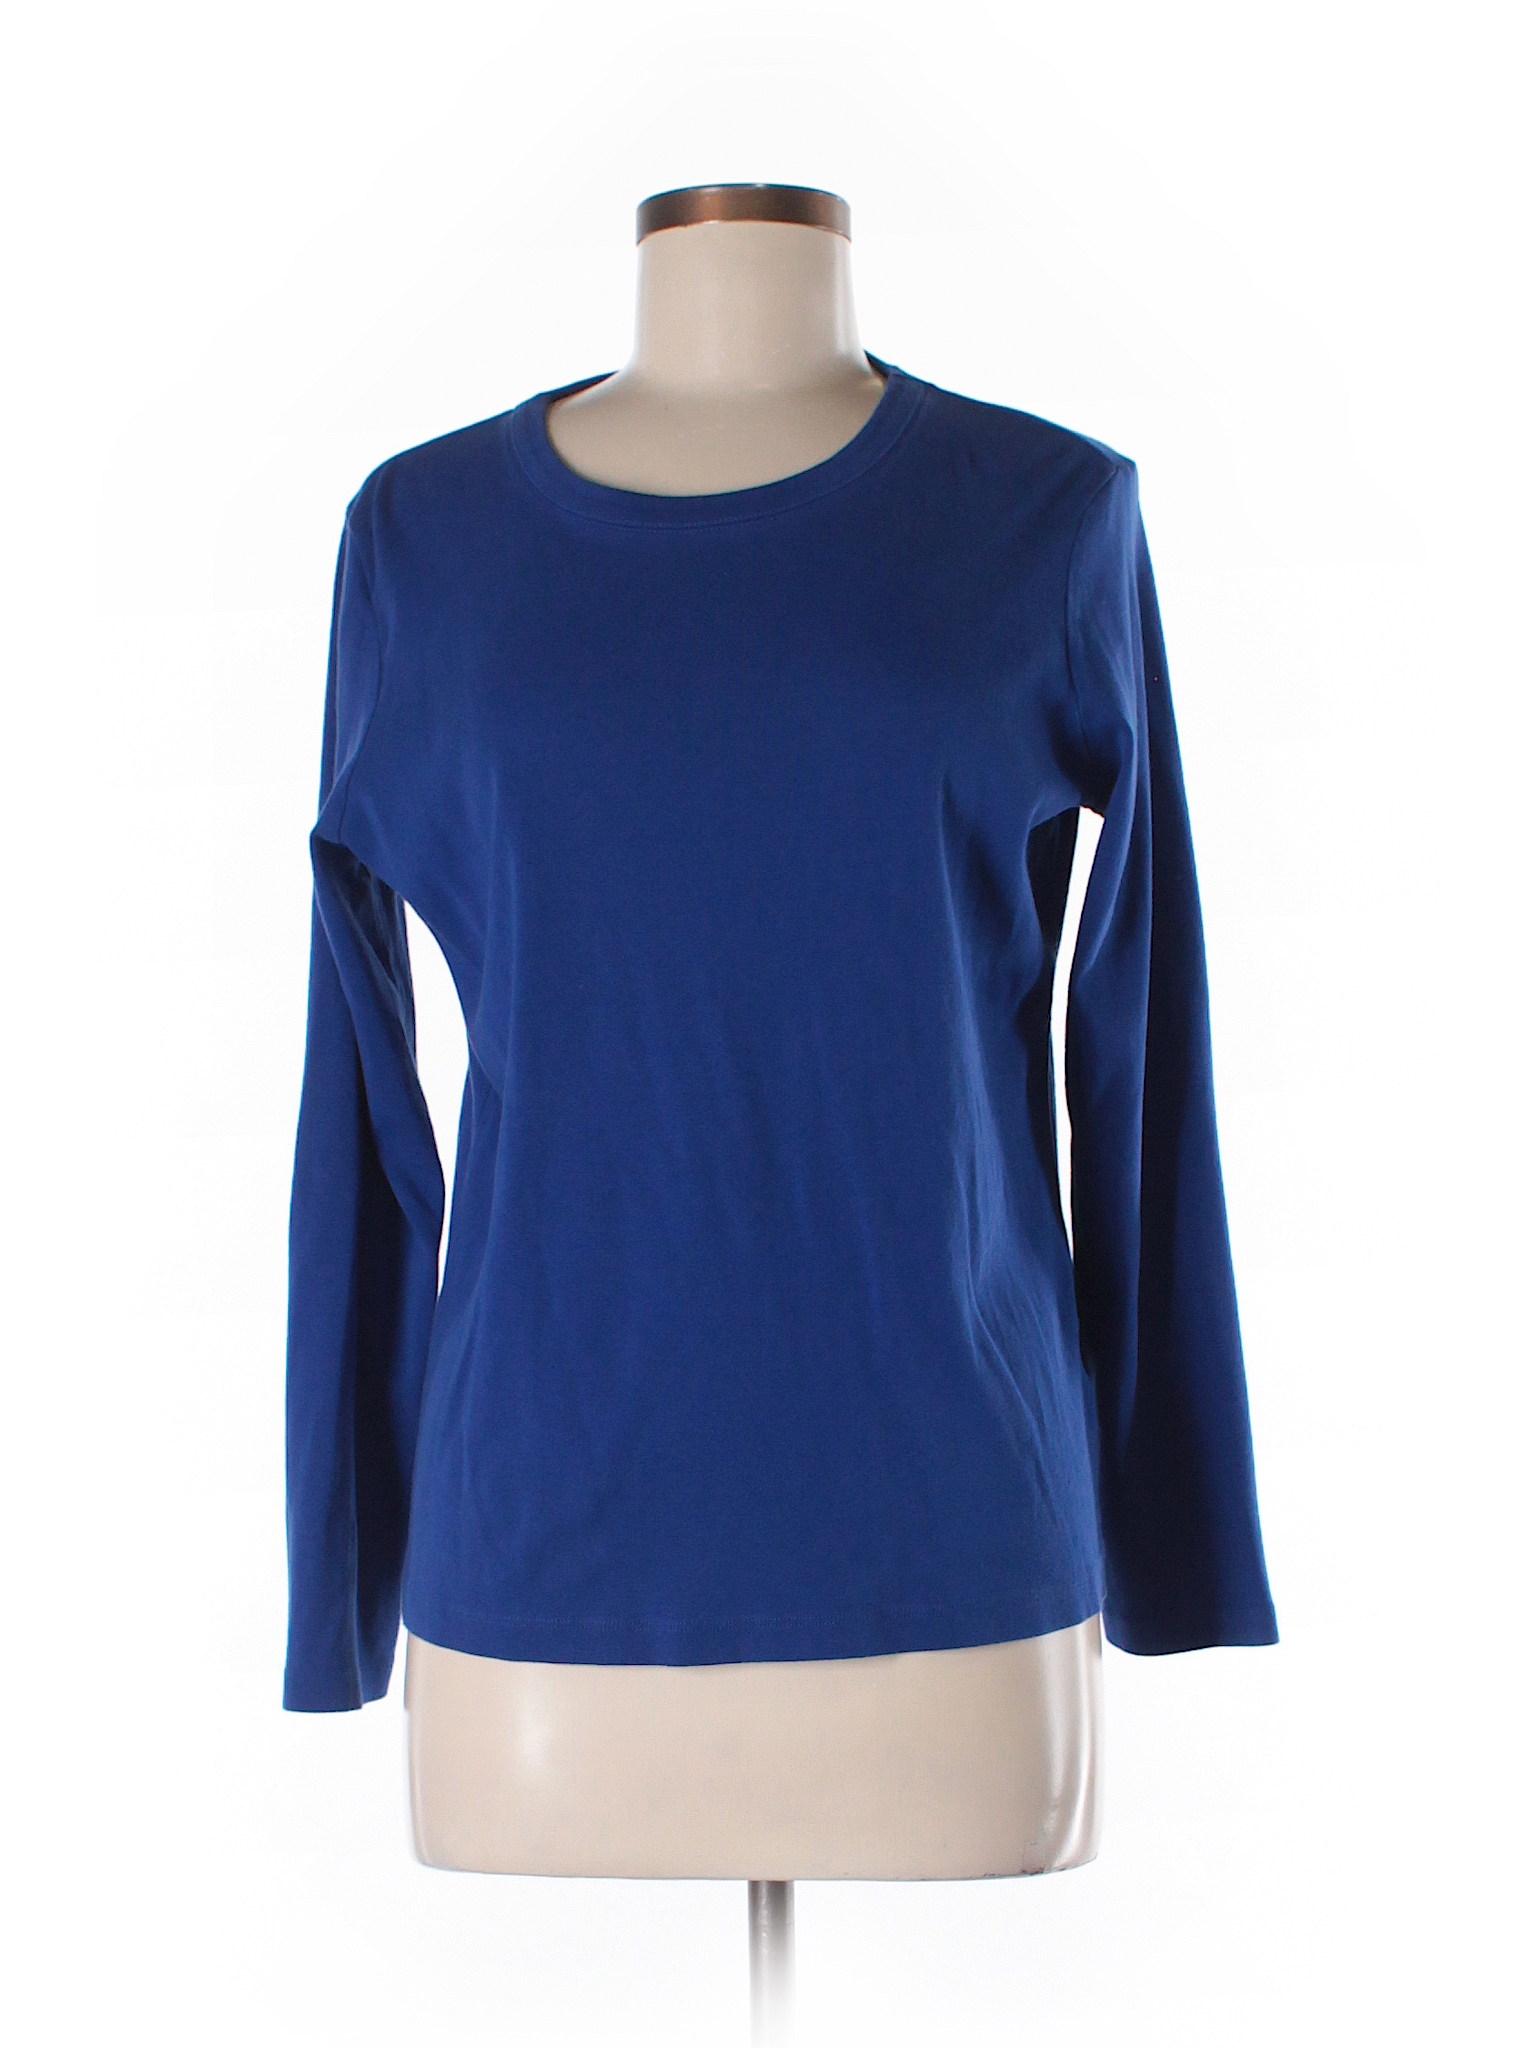 Lands' End 100% Supima Cotton Solid Blue Long Sleeve T-Shirt Size L ...